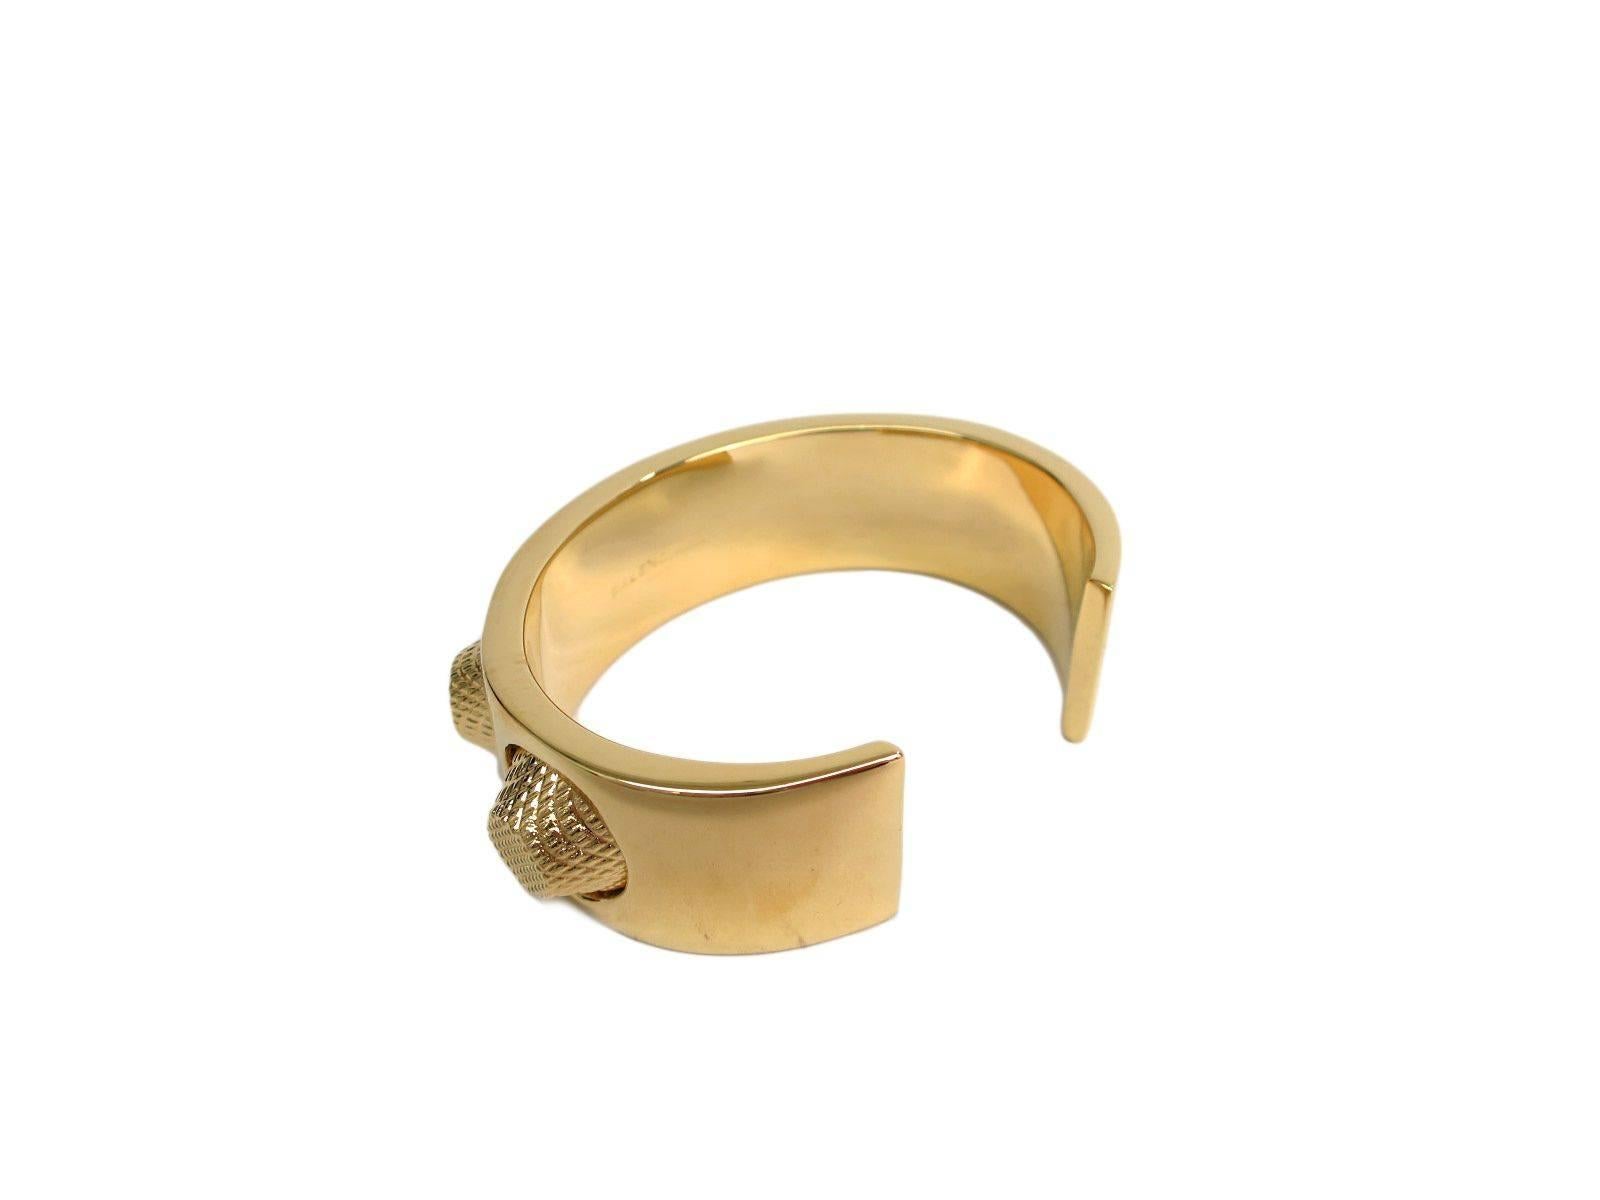 CURATOR'S NOTES

Balenciaga Textured Gold Spike Metal  Studded Charm Cuff Bracelet in Box  

Metal
Gold tone
Slip on
Width 0.8"
Circumference 6.7"
Includes original Balenciaga box